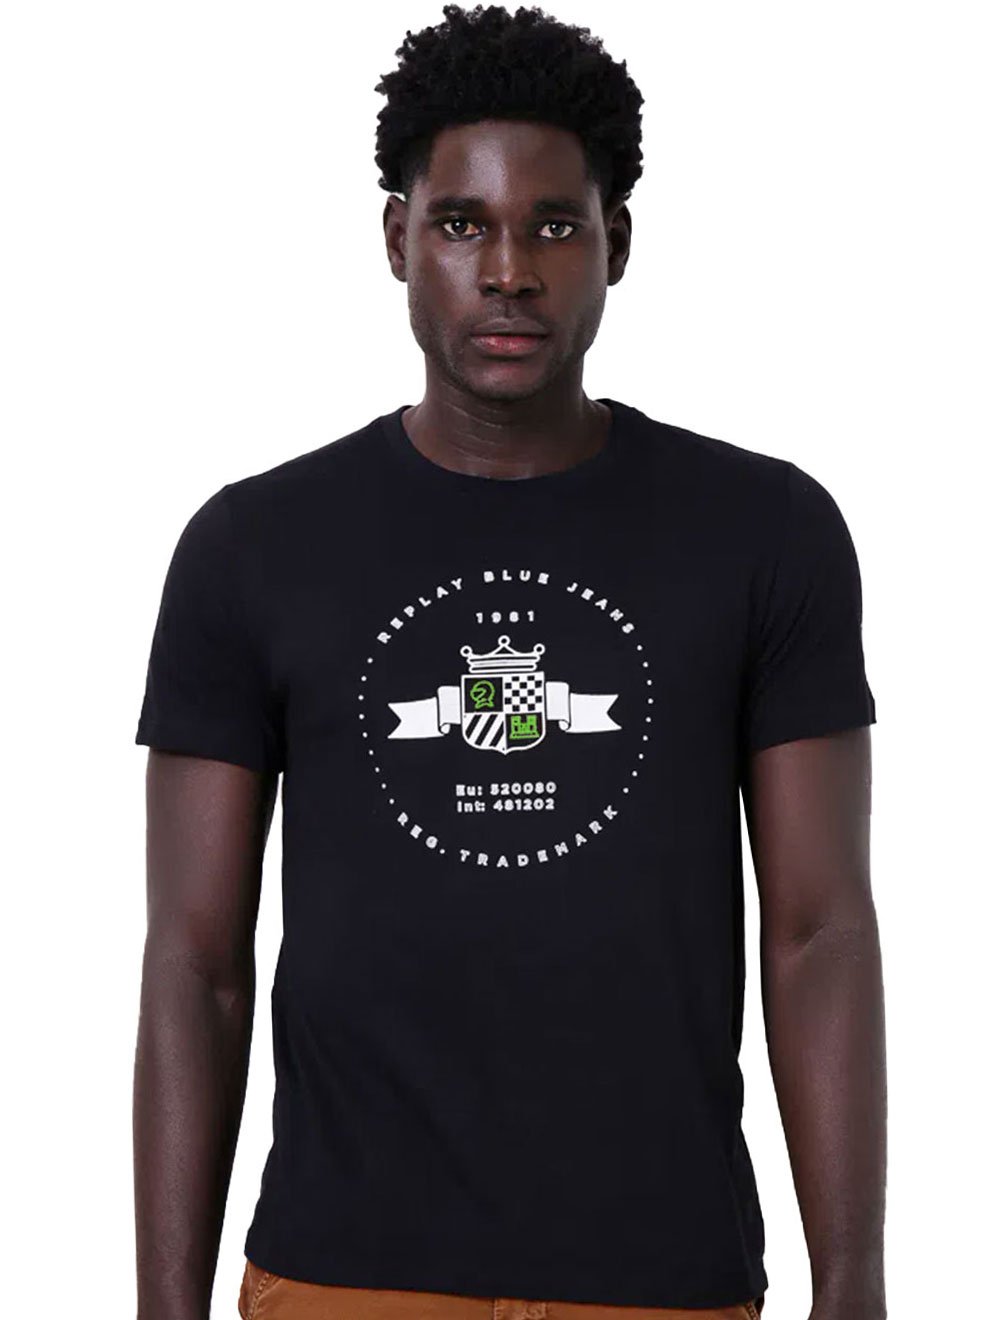 Camiseta Replay Masculina C-Neck Trademark Chess Preta